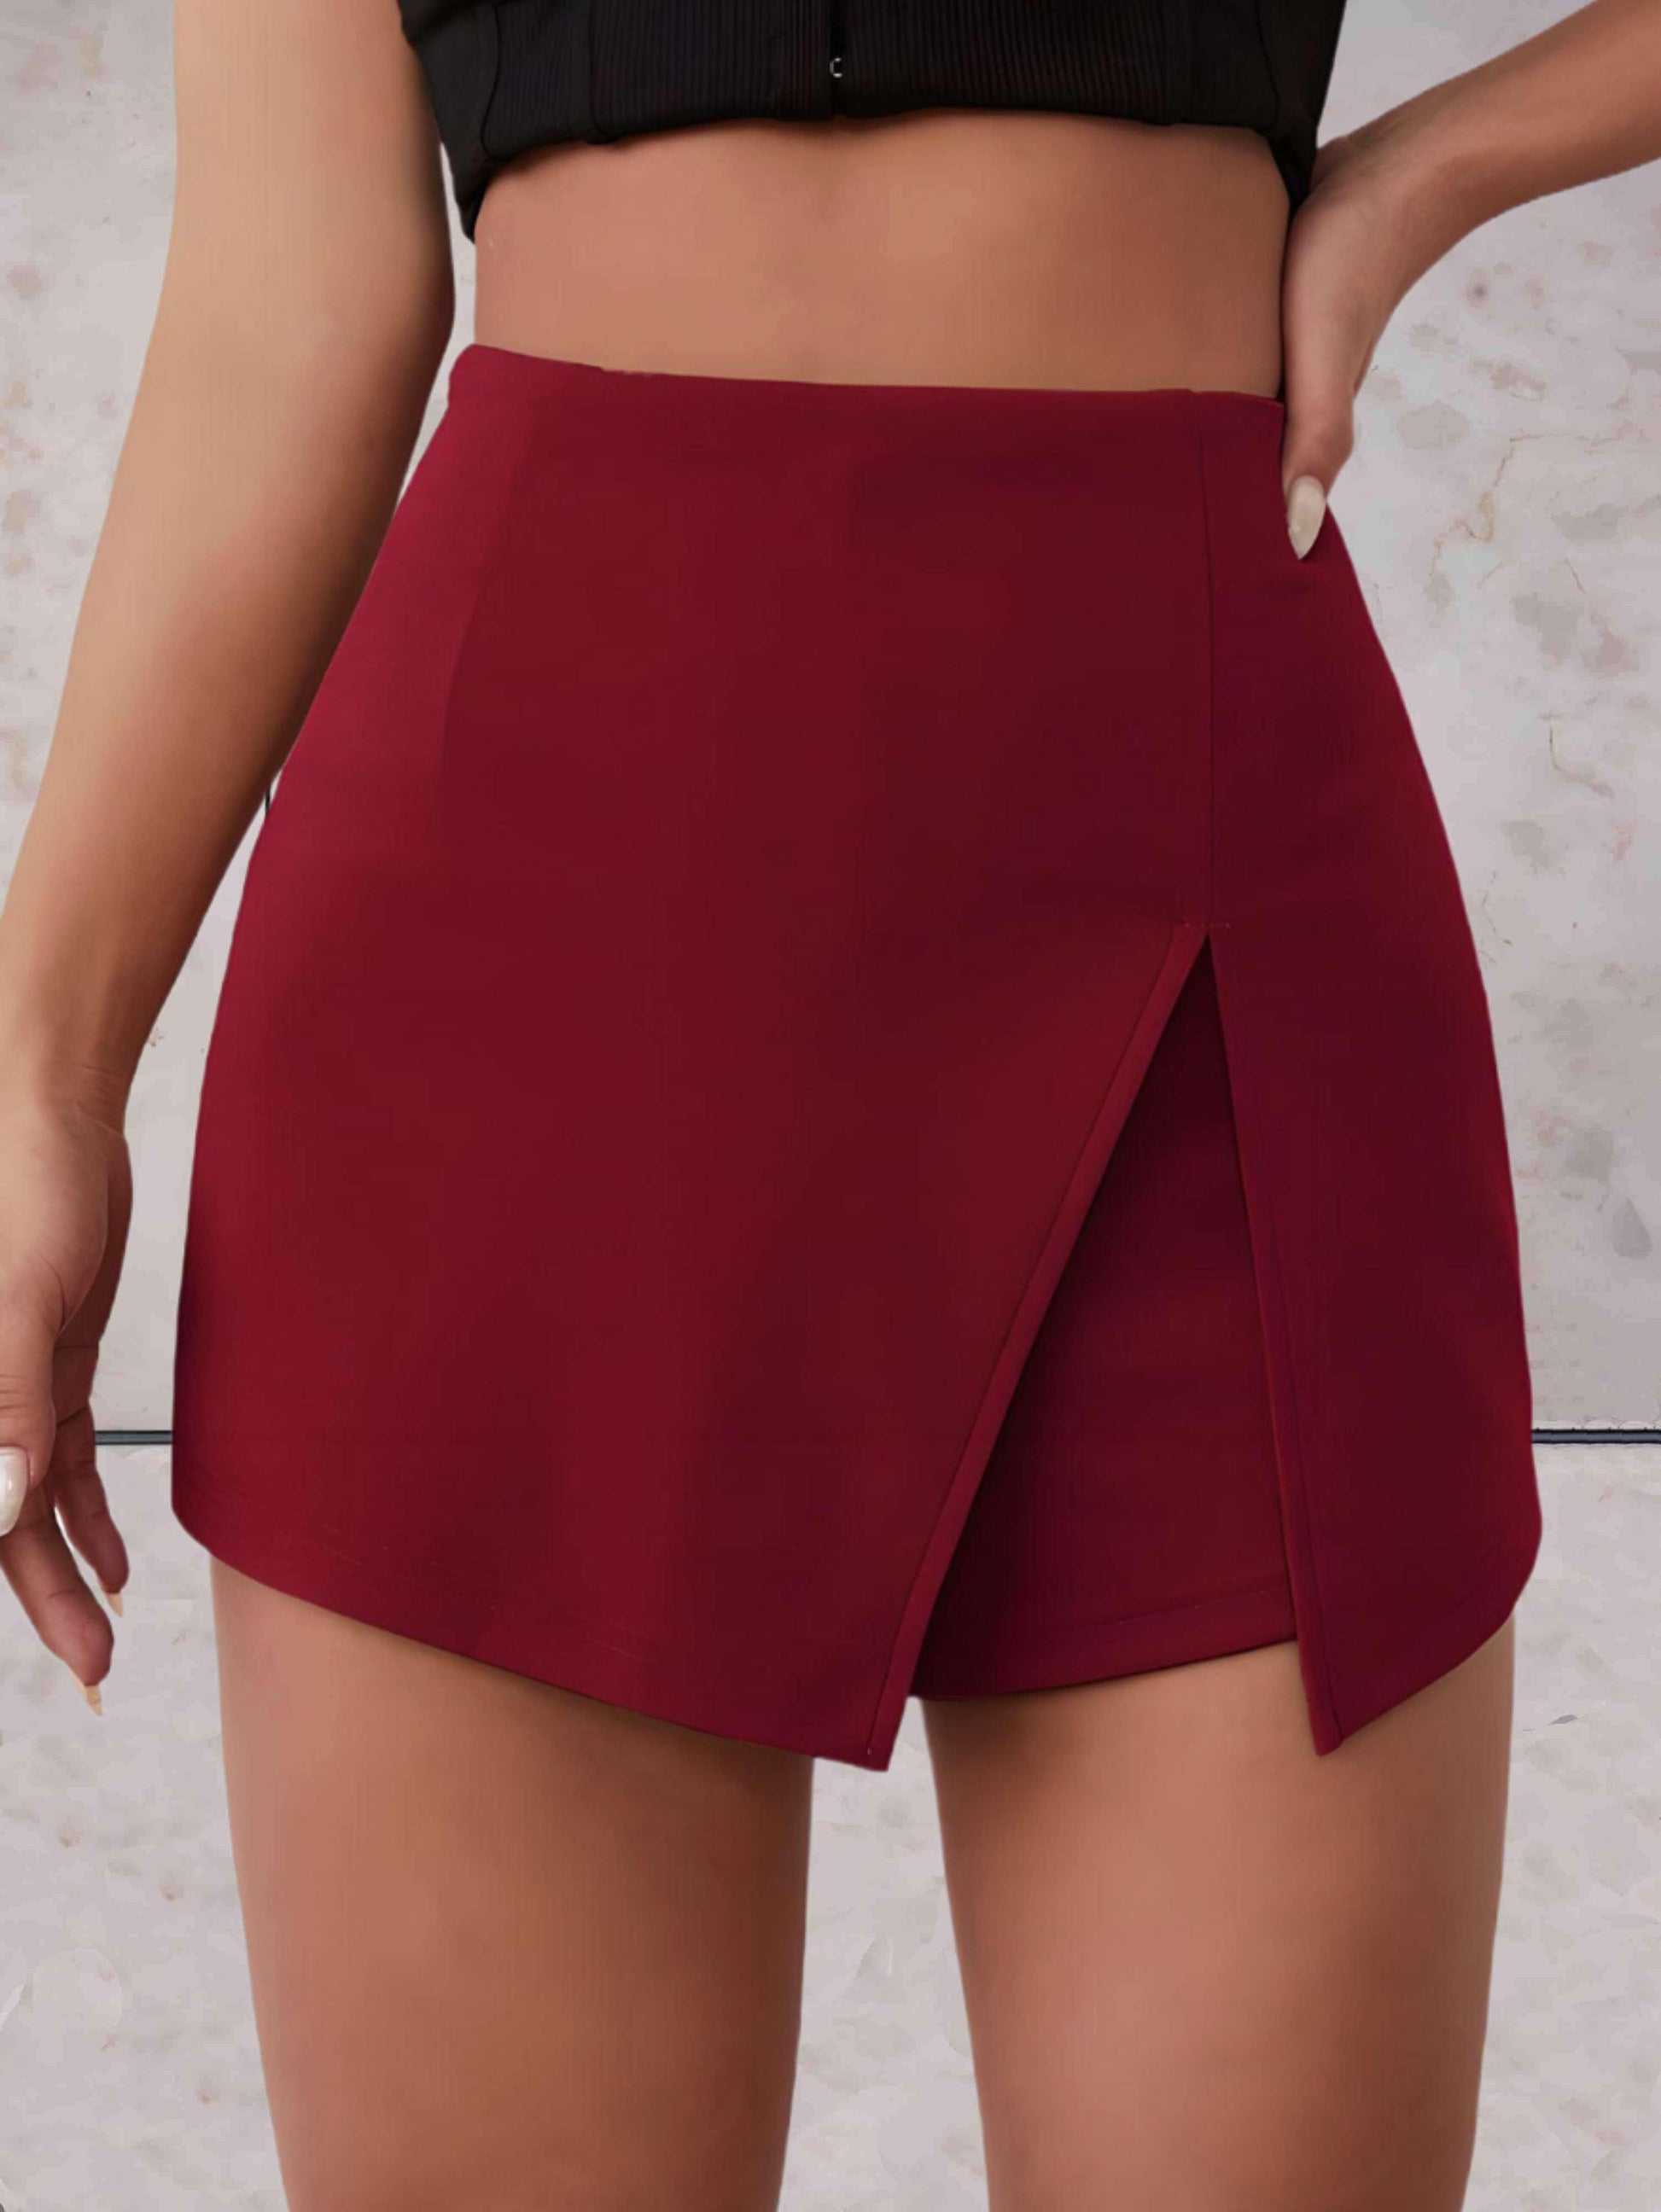 Ally - Strakke high-waist shorts van katoen in bordeaux rood - Sky-Sense